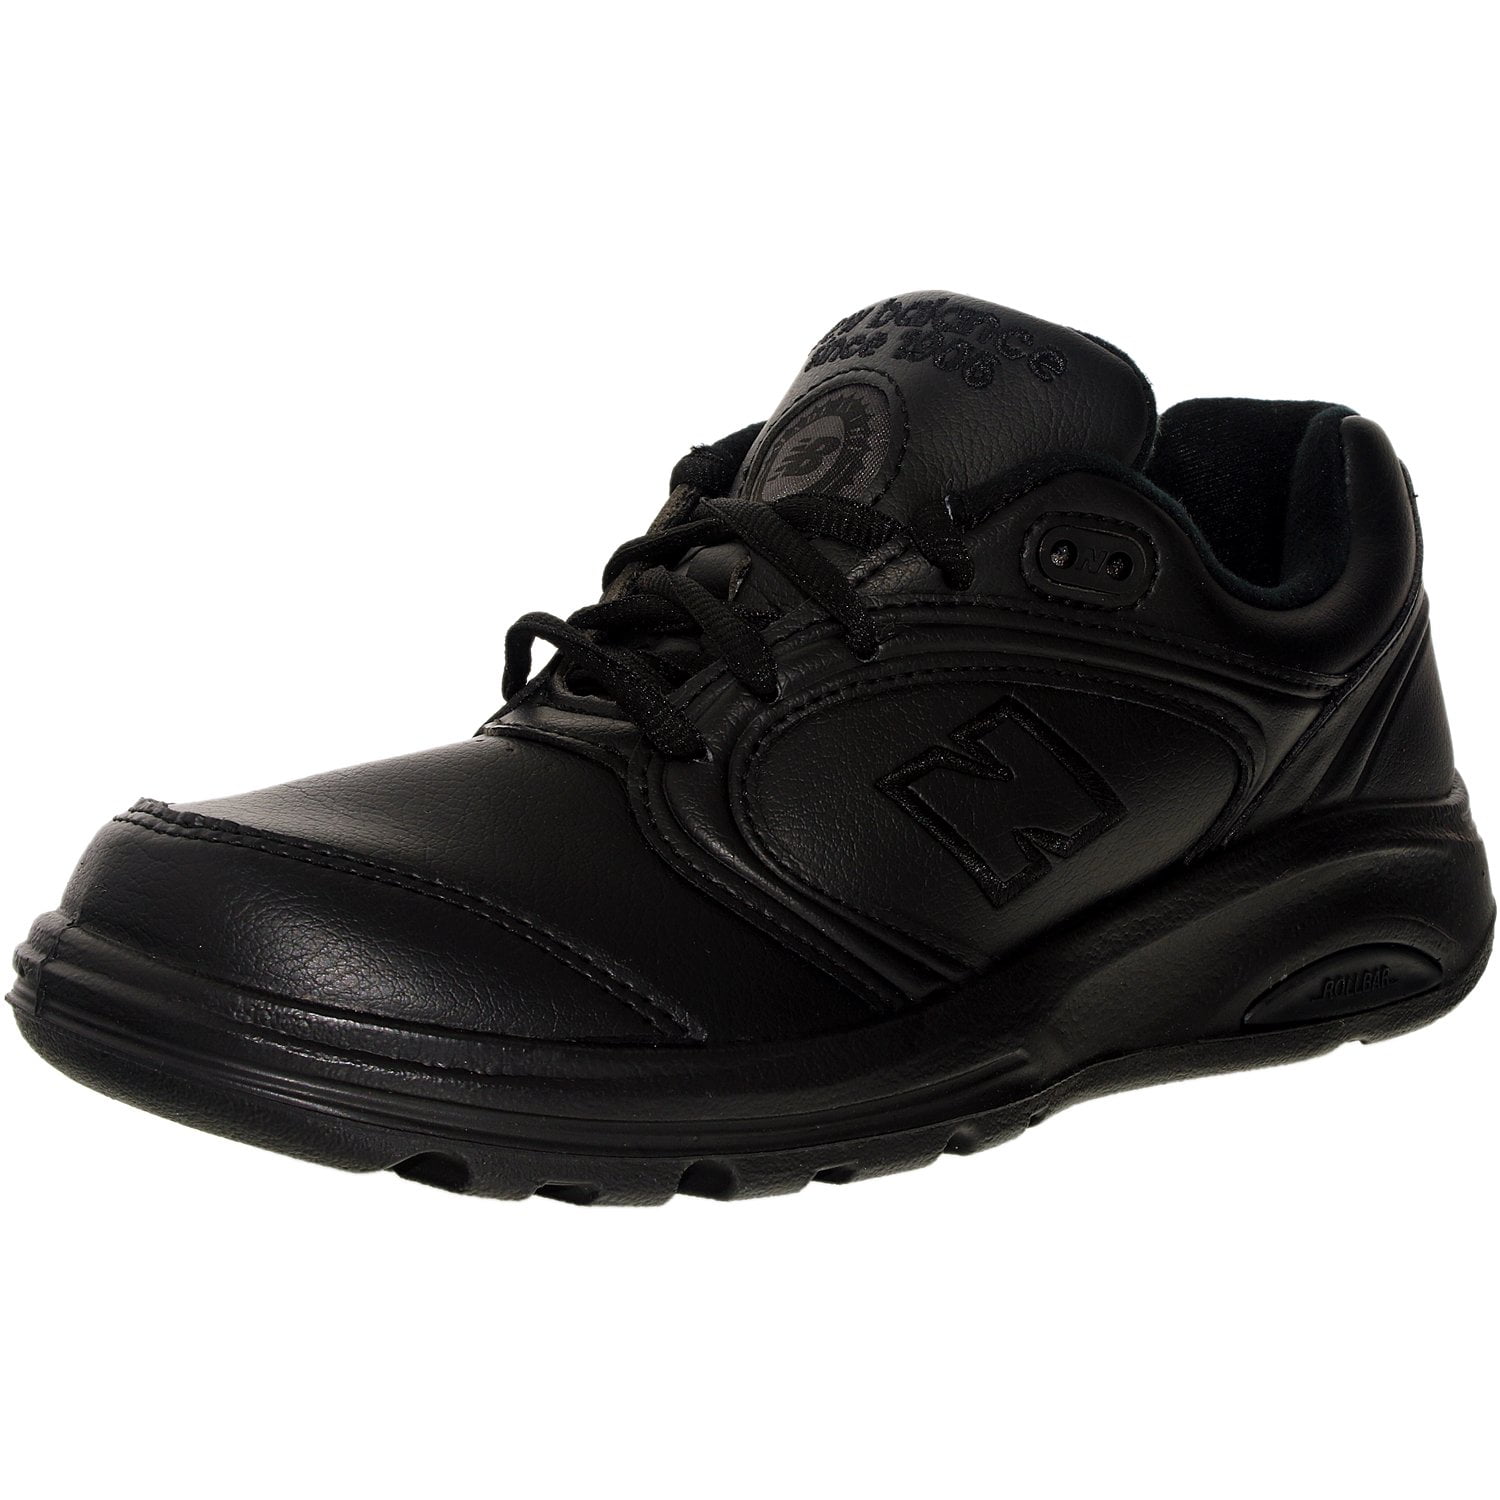 New Balance Women's Ww812Bk Black Ankle-High Leather Walking Shoe - 6N ...